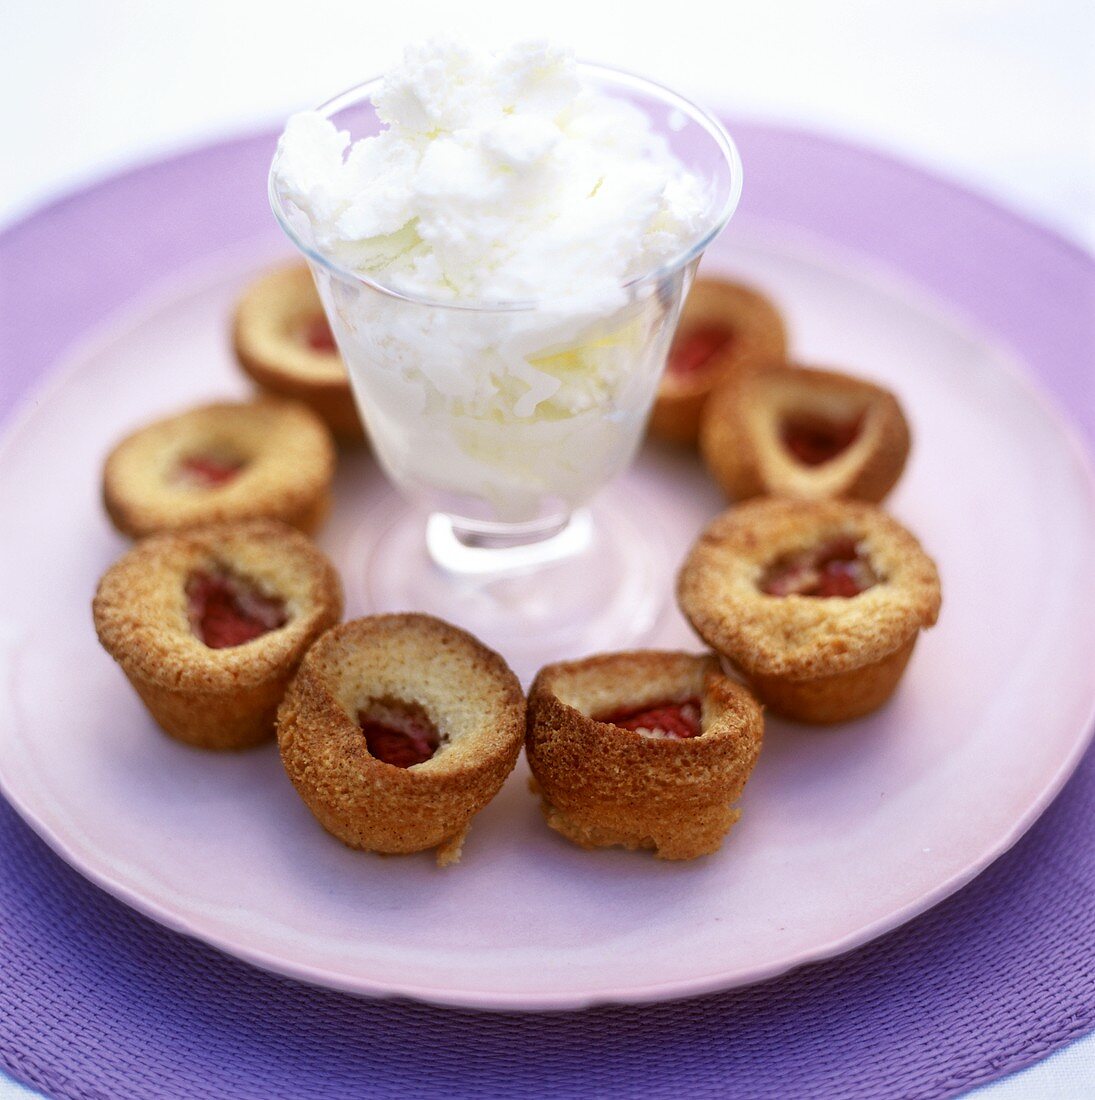 Raspberry mini-muffins and an ice cream sundae